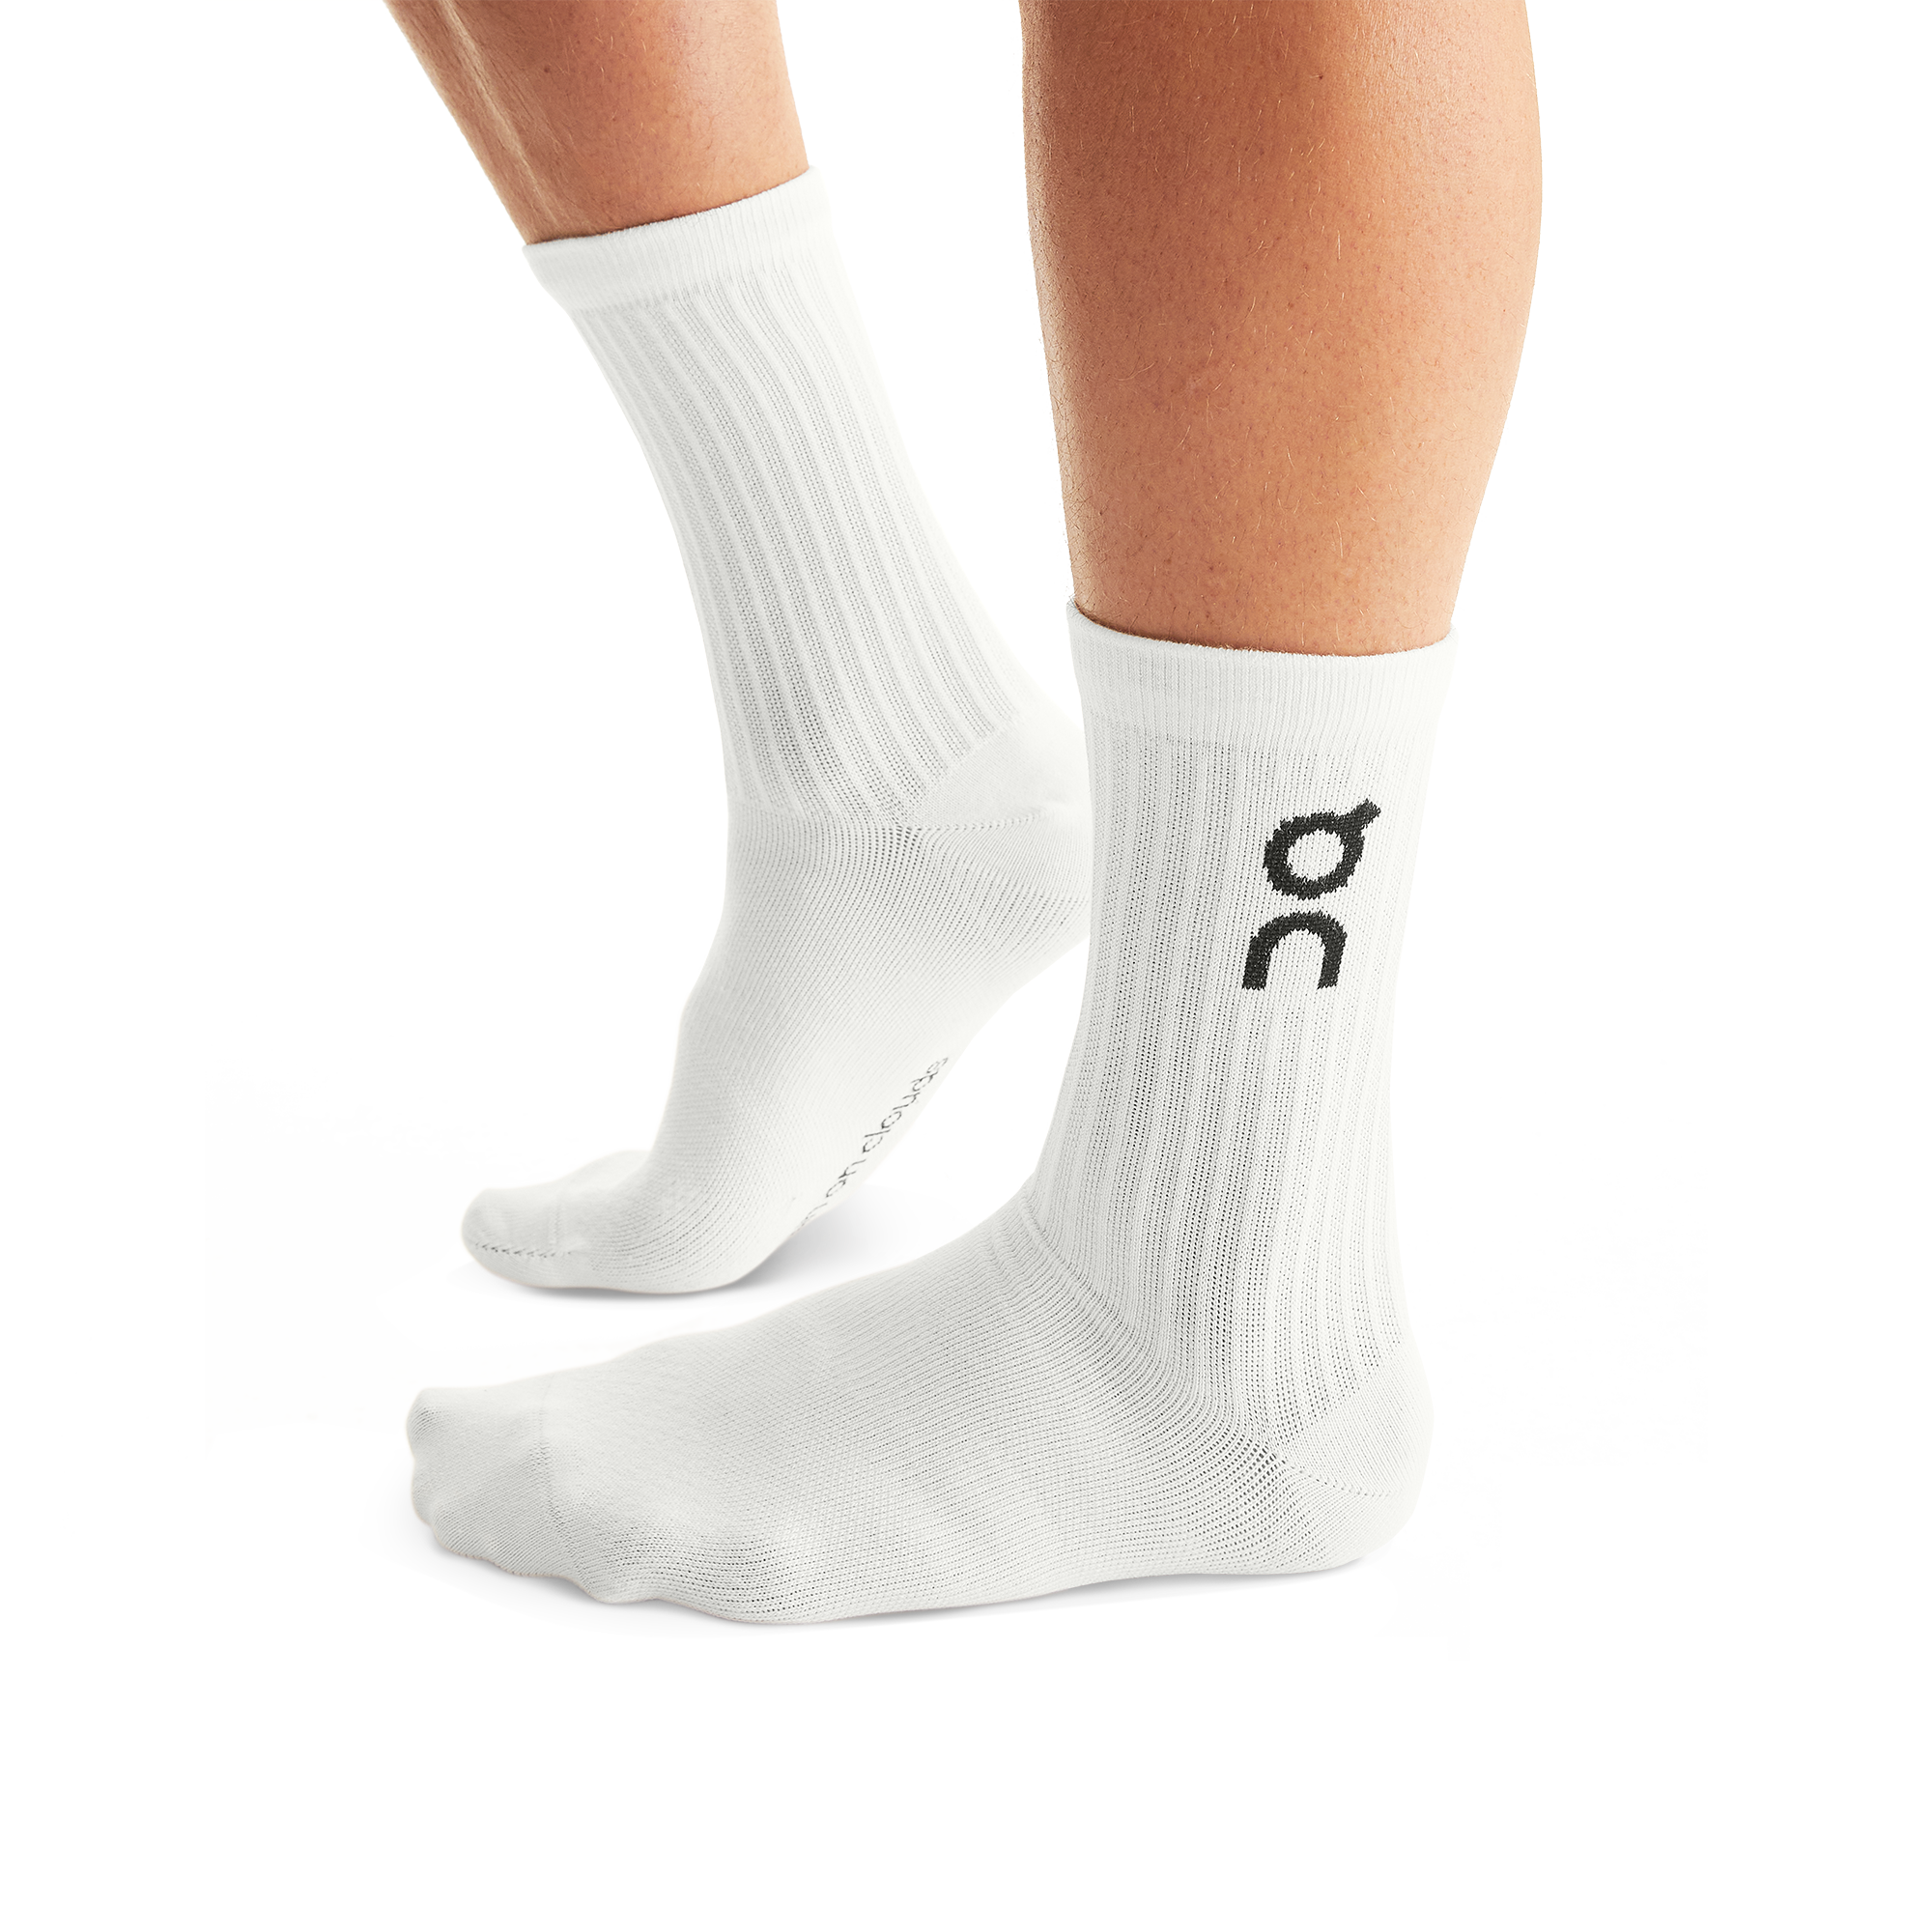 Union Ankle Grip Socks - Accessories